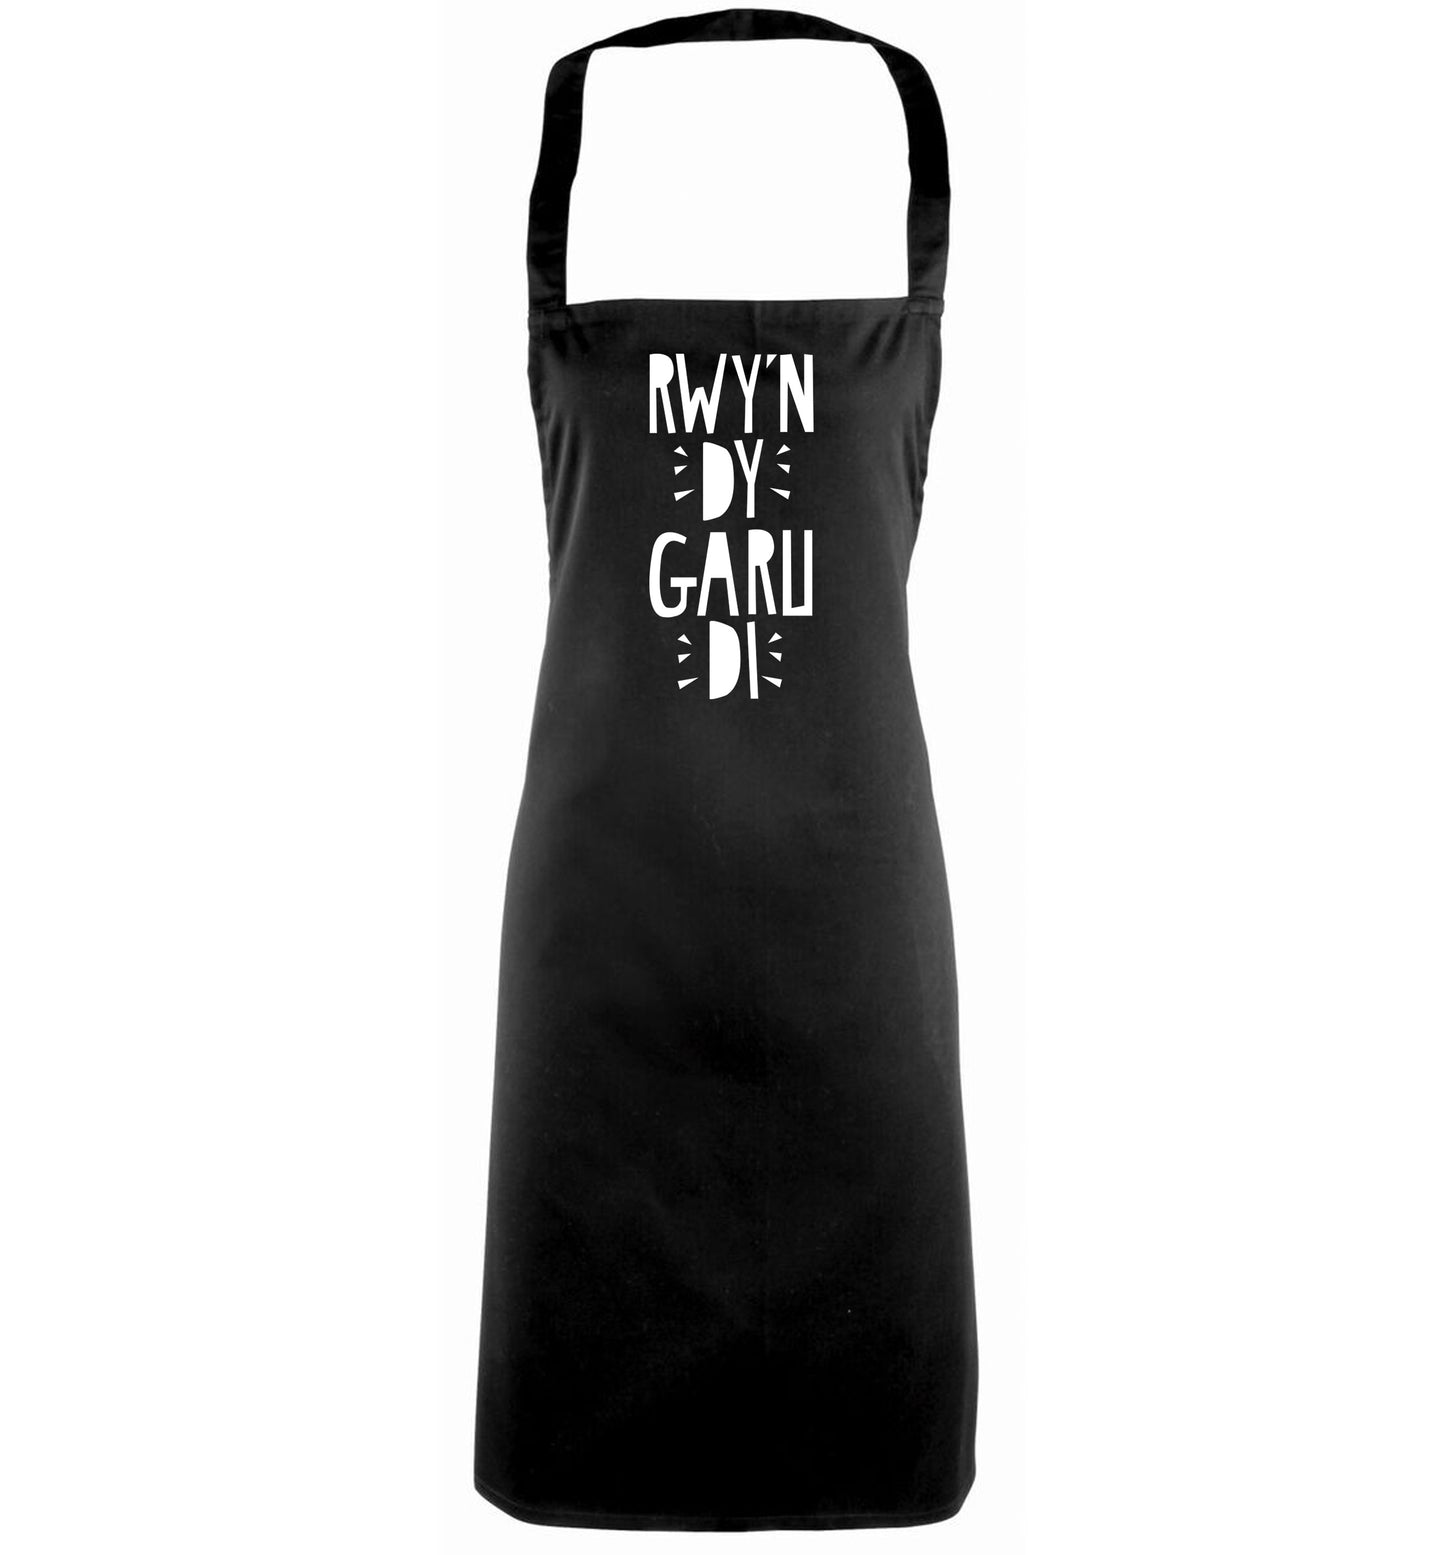 Rwy'n dy garu di - I love you black apron